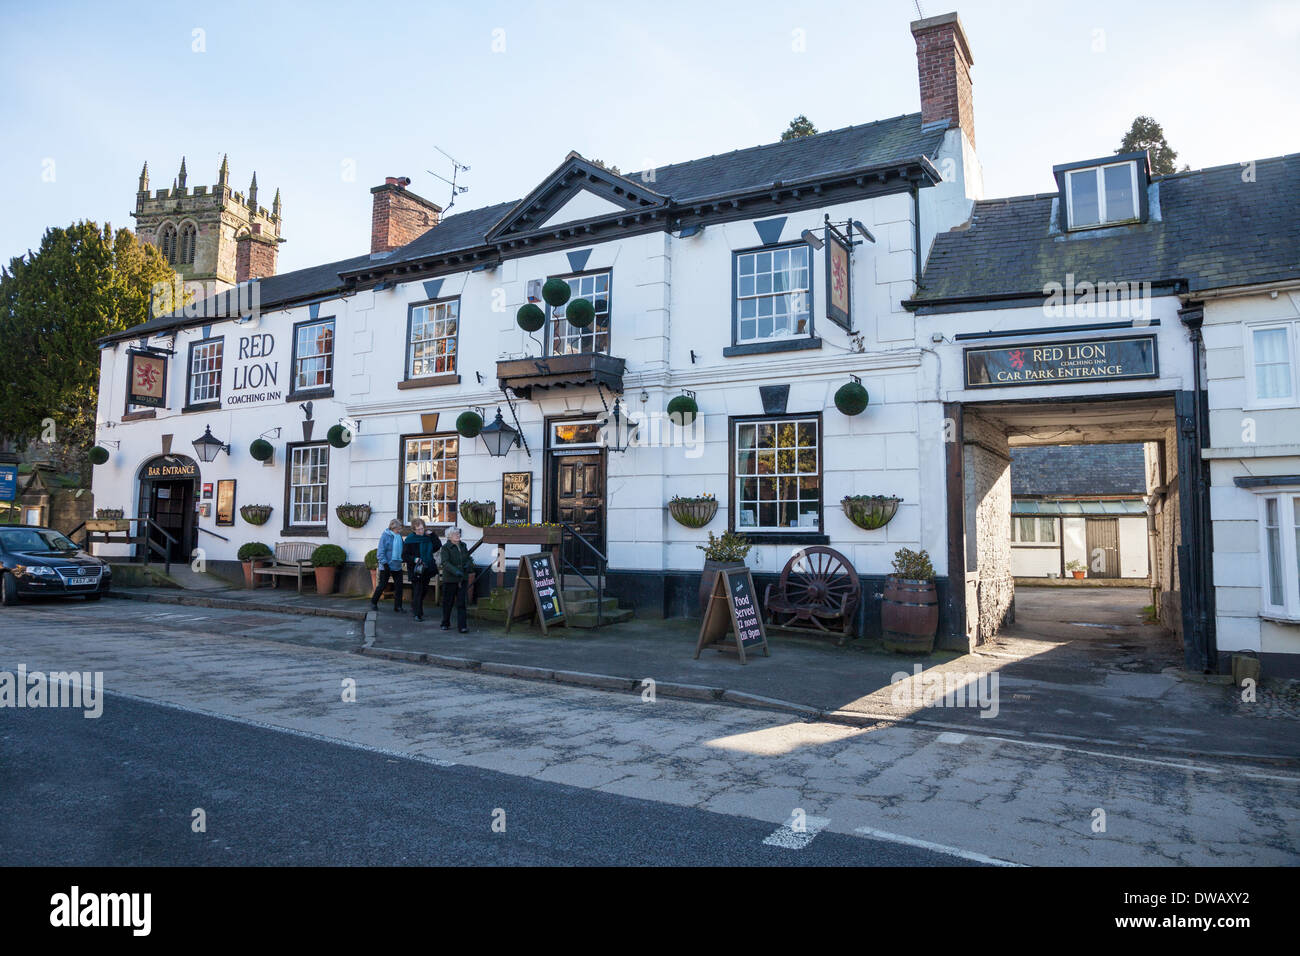 The Red Lion Coaching Inn or pub Ellesmere Shropshire England UK Stock Photo